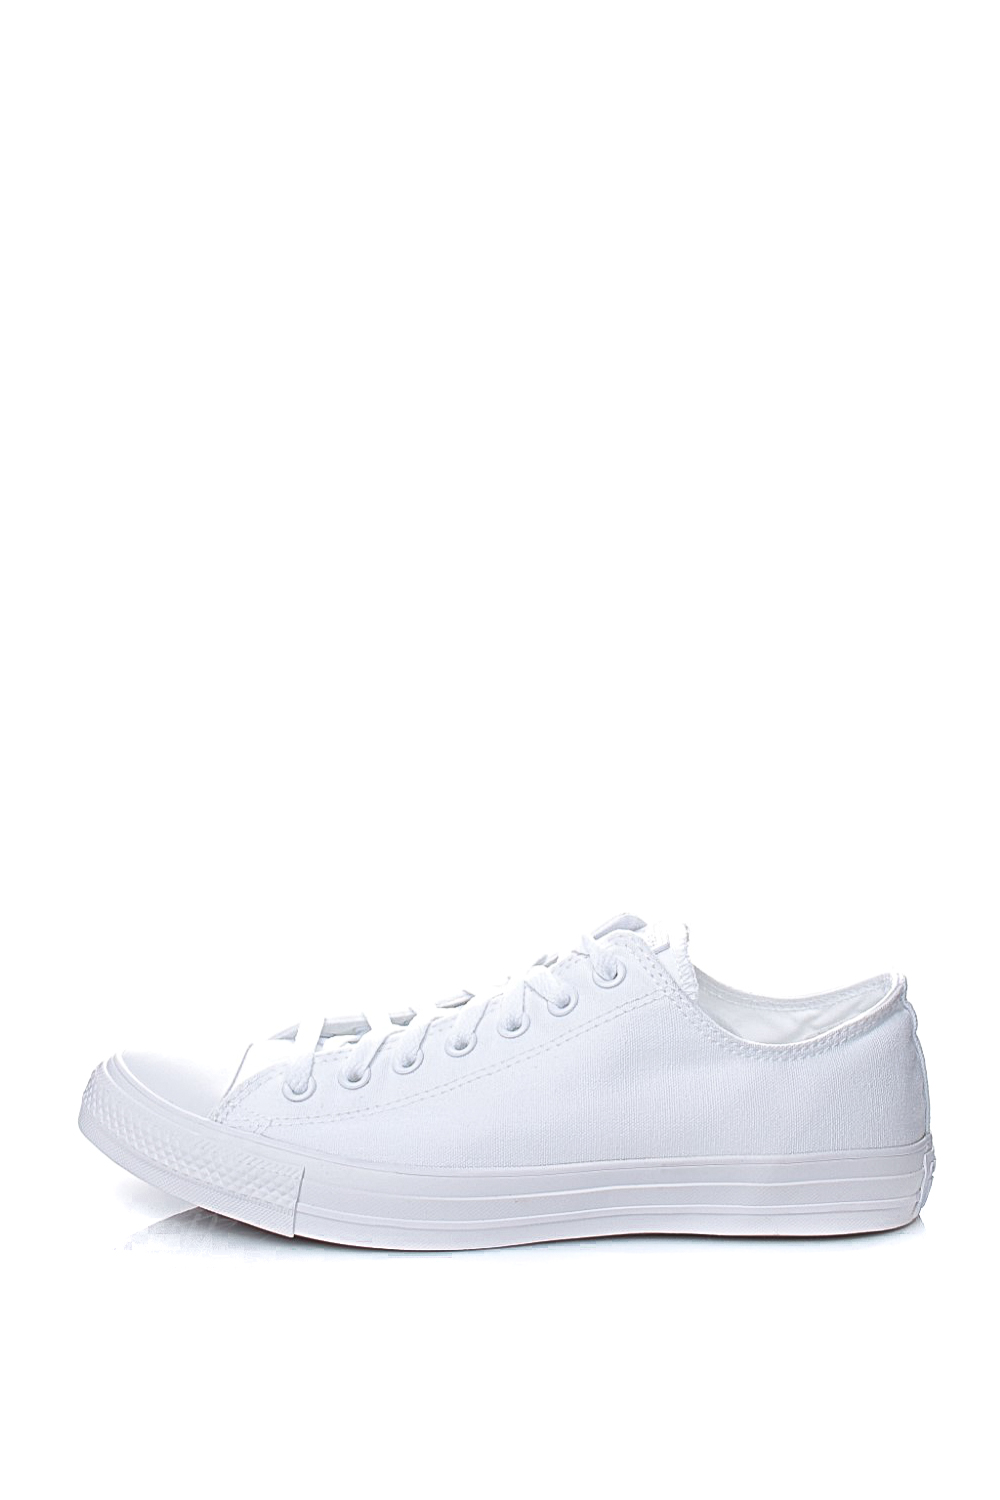 CONVERSE – Unisex παπούτσια Chuck Taylor All Star Ox λευκά